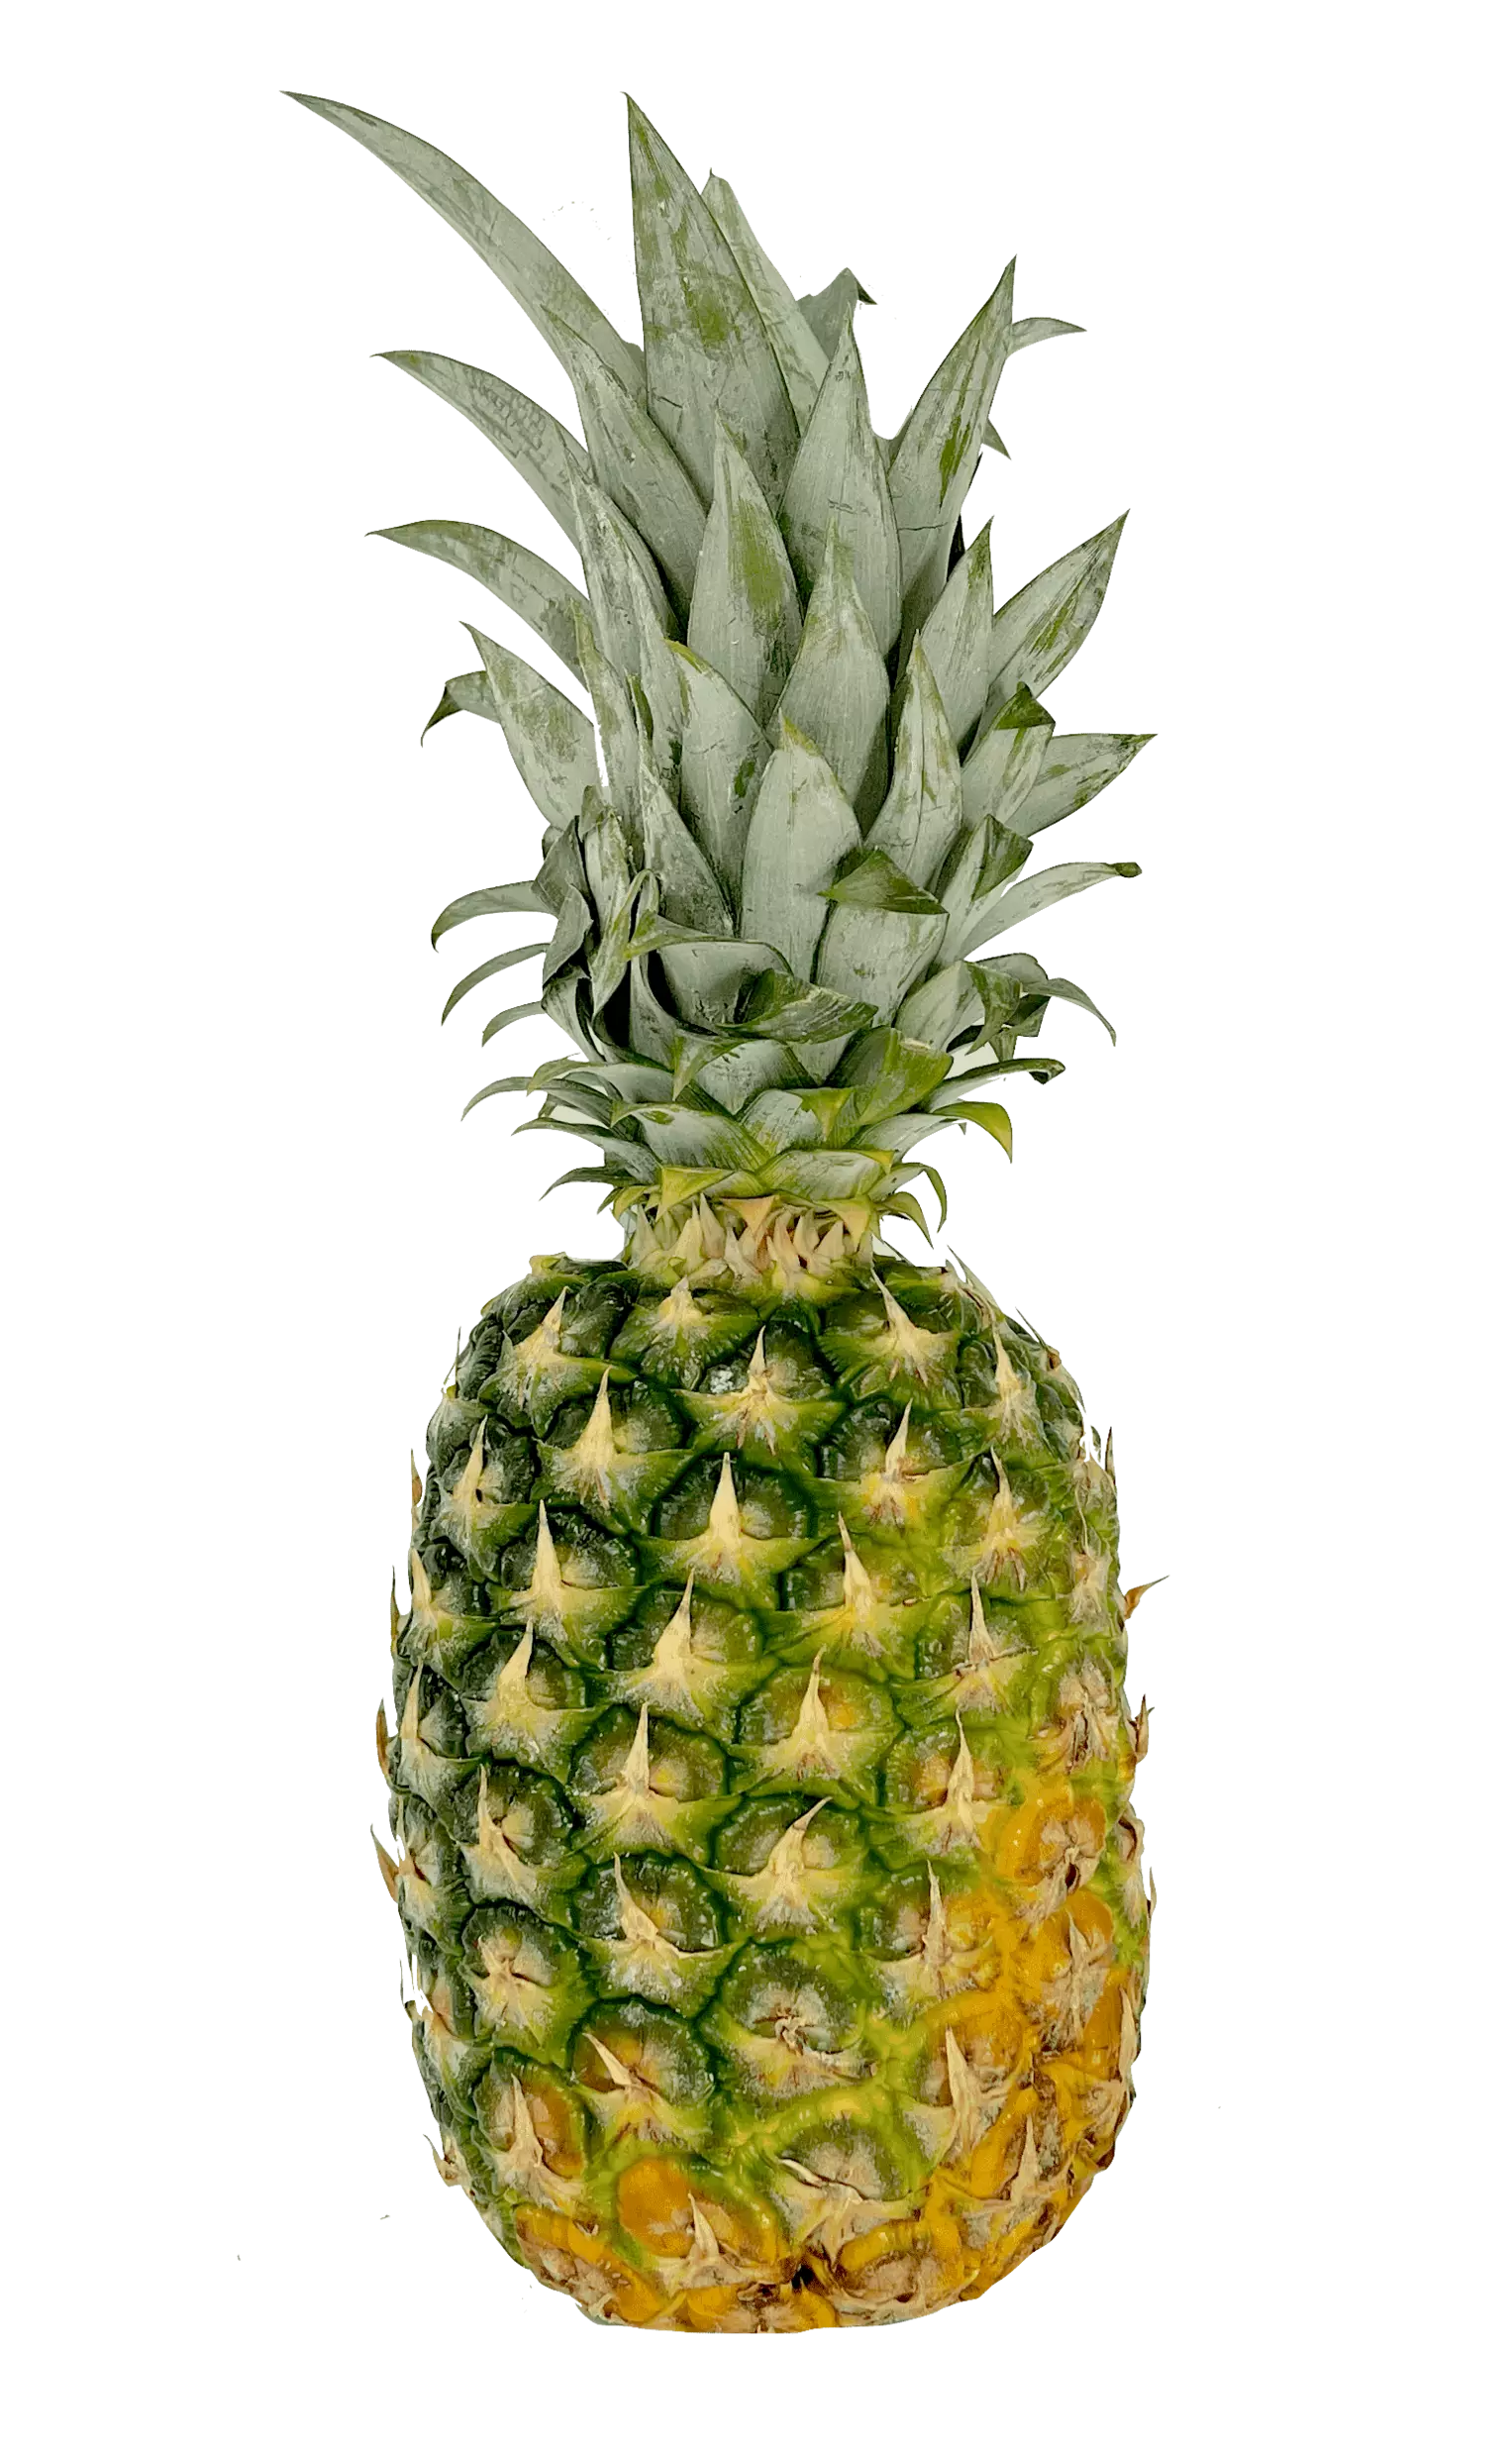 Pineapple ca1400g-1700g/1pcs, price per piece Costa Rica